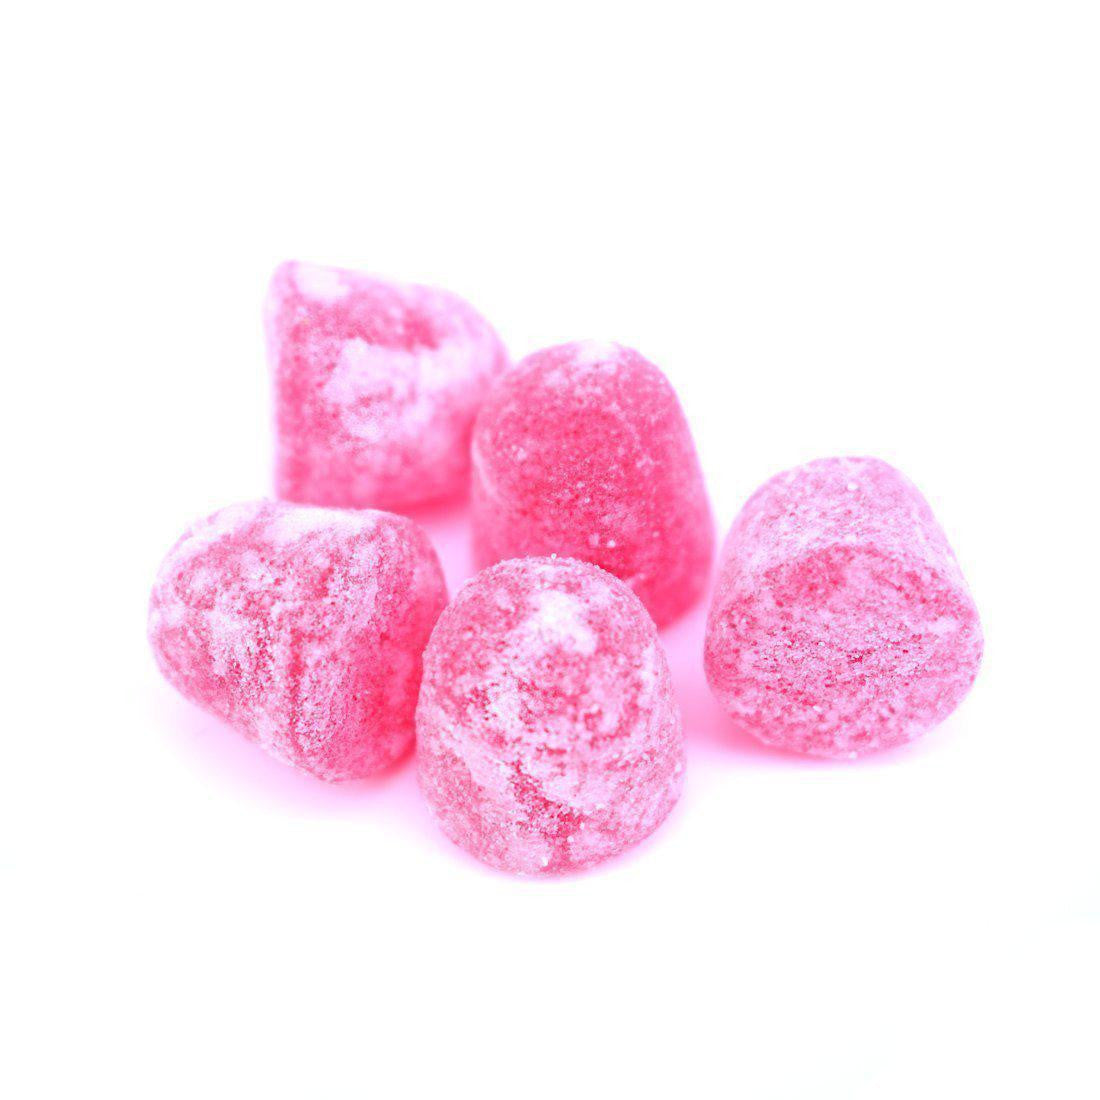 de Bron Sugar Free Raspberry Gum Drops Sweets 200g - Sweet Victory Products Ltd